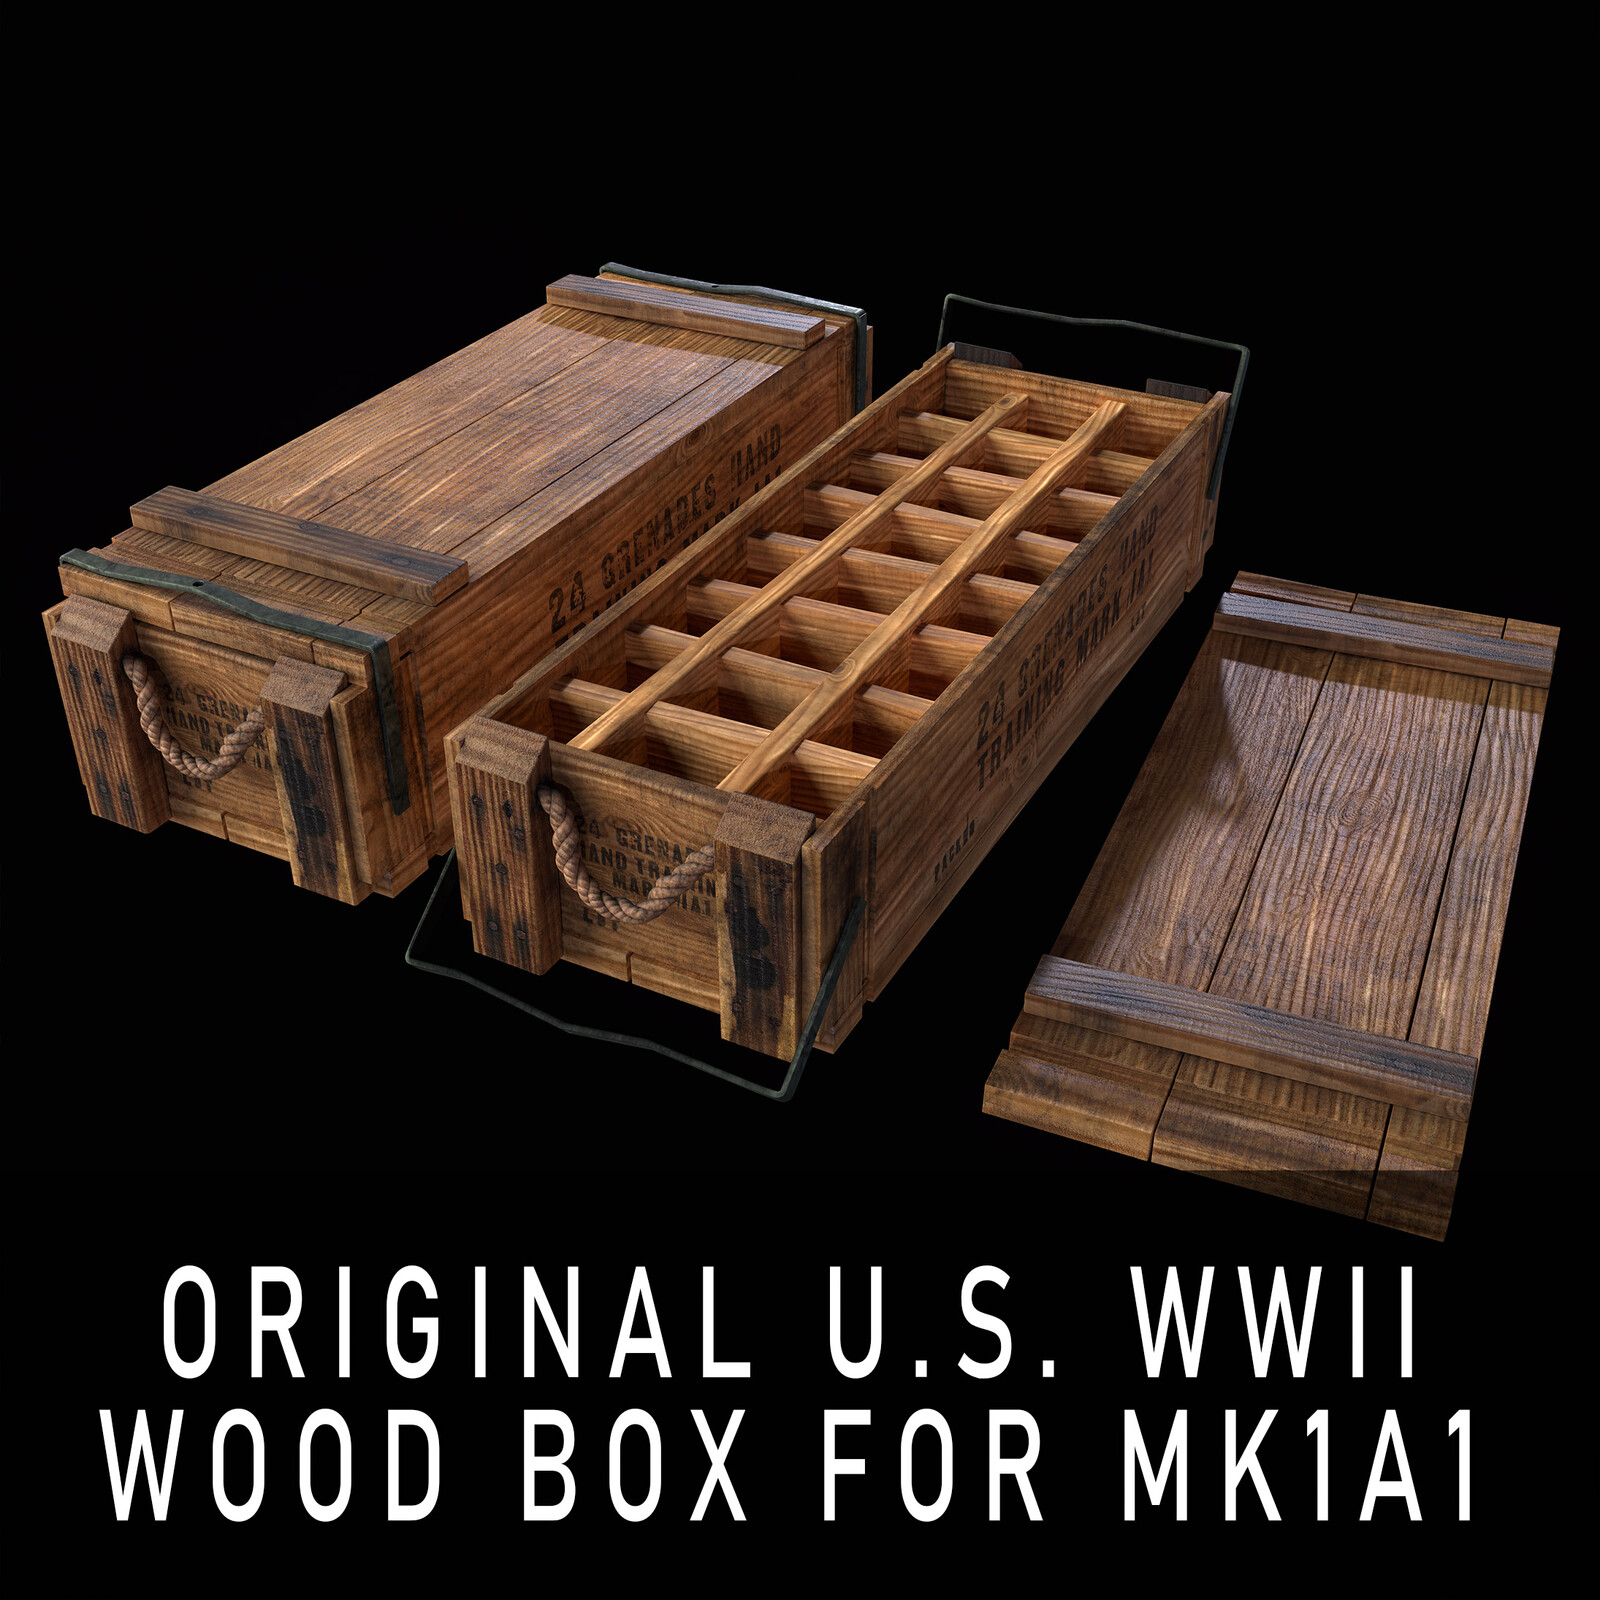 Original U.S. WWII Wood Box for MK1A1 Grenades